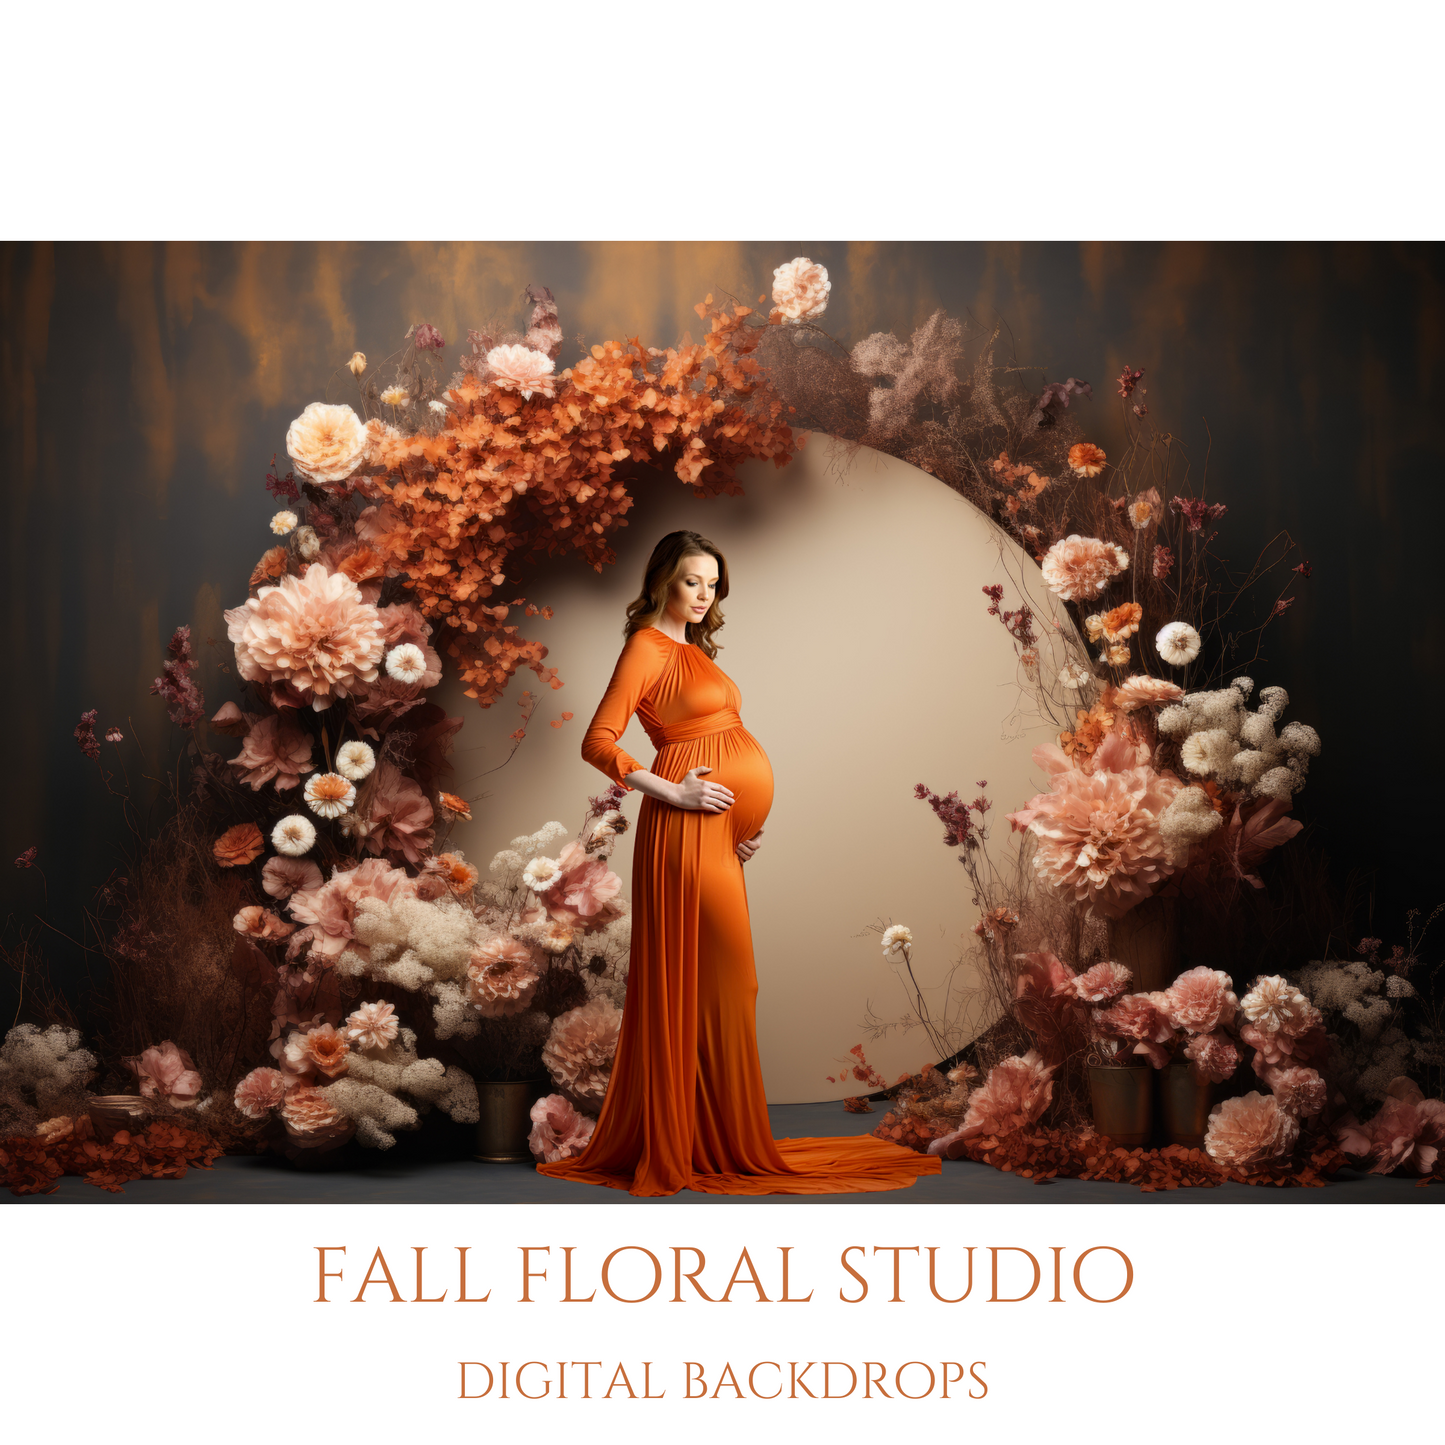 Fall Floral Photo Studio Digital Backdrops